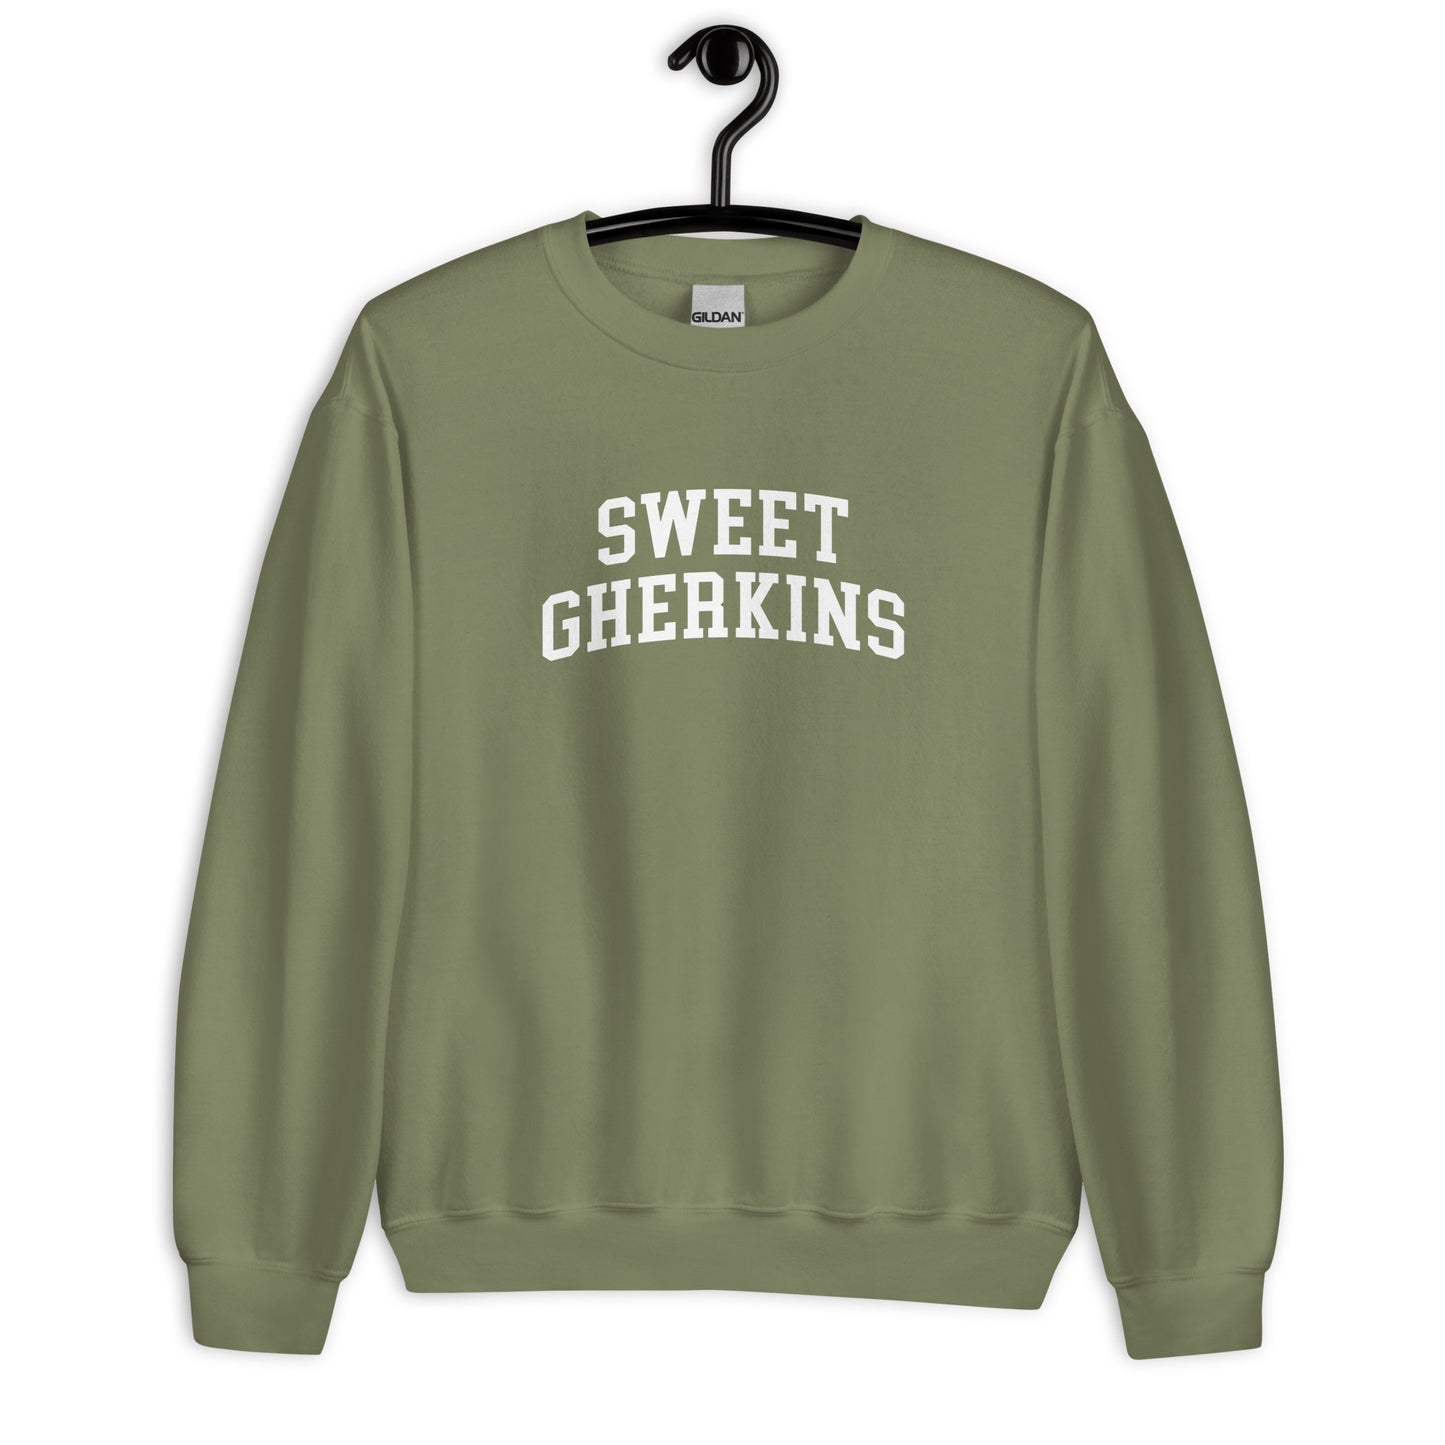 Sweet Gherkins Sweatshirt - Arched Font